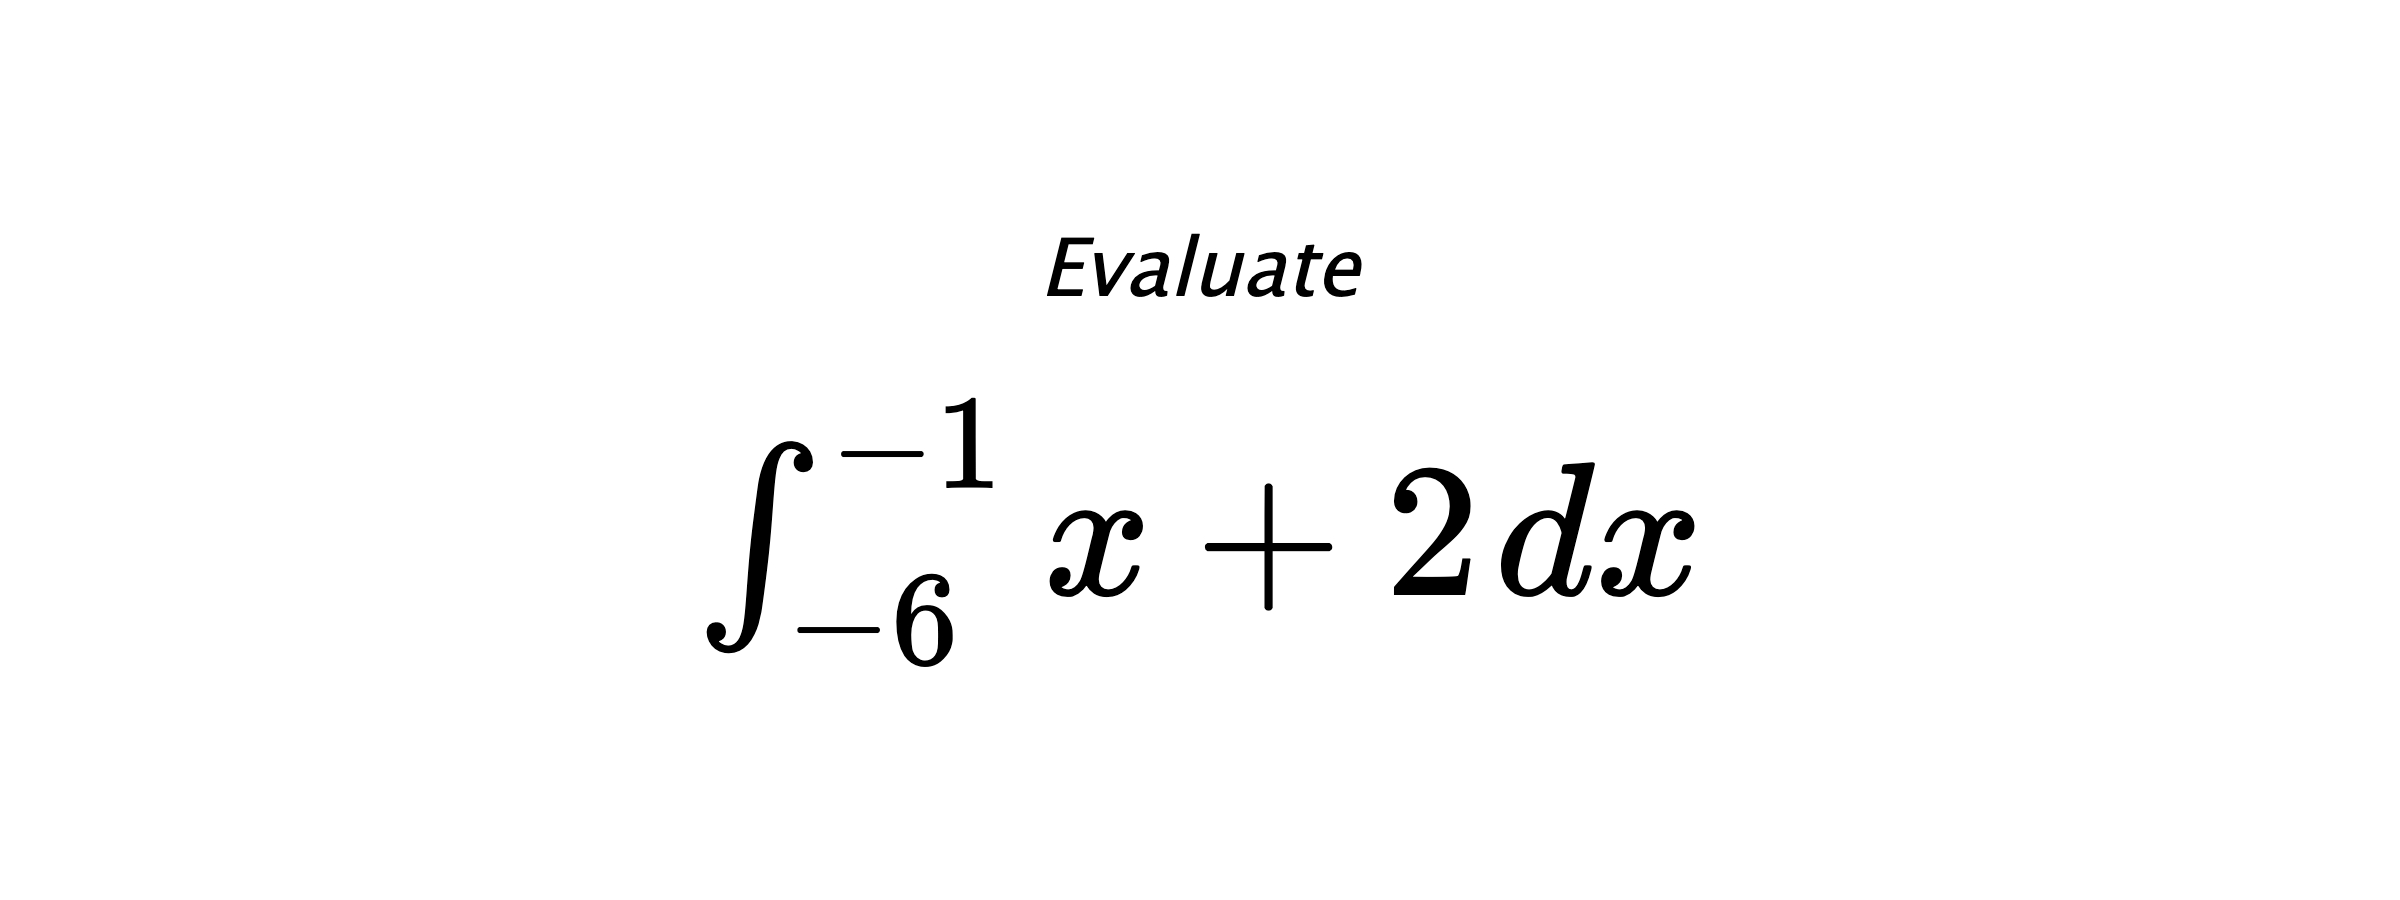 Evaluate $ \int_{-6}^{-1} x+2 \hspace{0.2cm} dx $